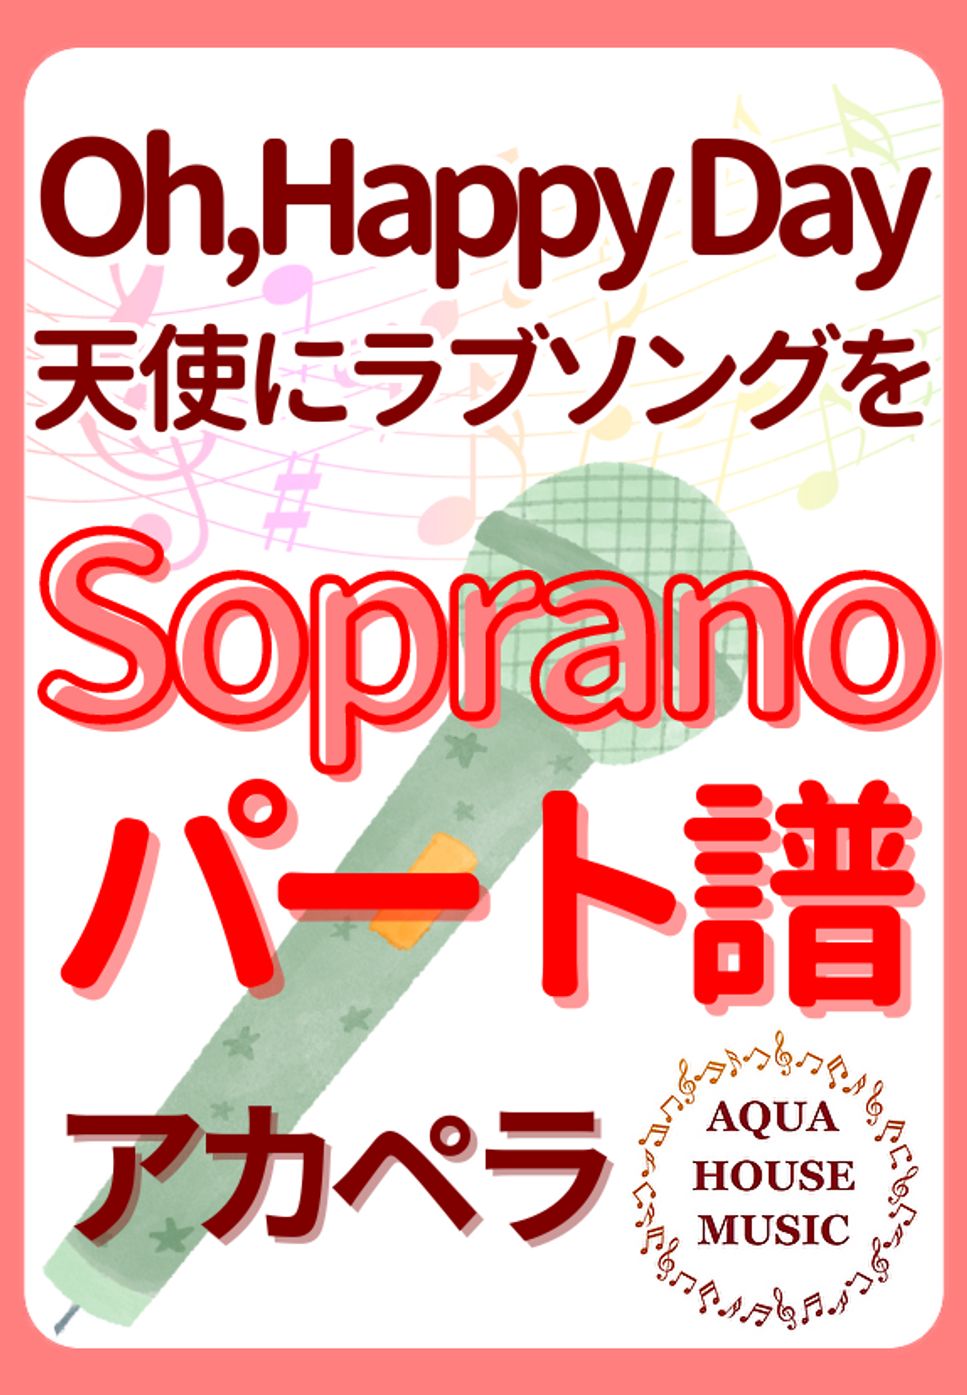 Oh, Happy Day (アカペラ楽譜♪Sopranoパート譜) by 飯田 亜紗子